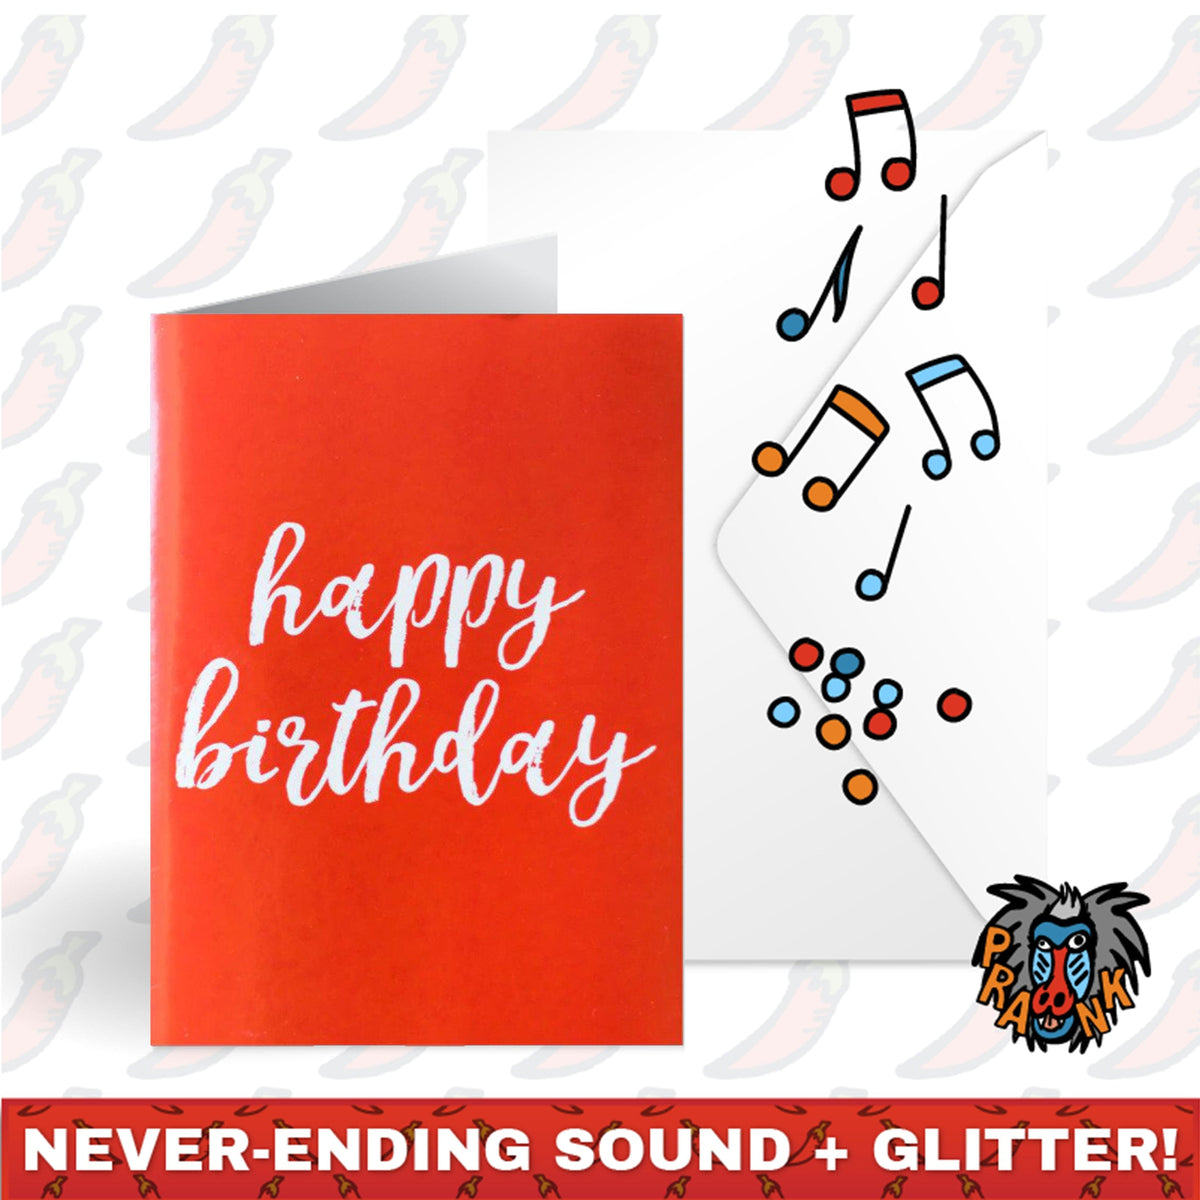 BIRTHDAY ENDLESS CARD 🎂🔊 - JOKER GREETING PRANK CARD (GLITTER + SOUND)